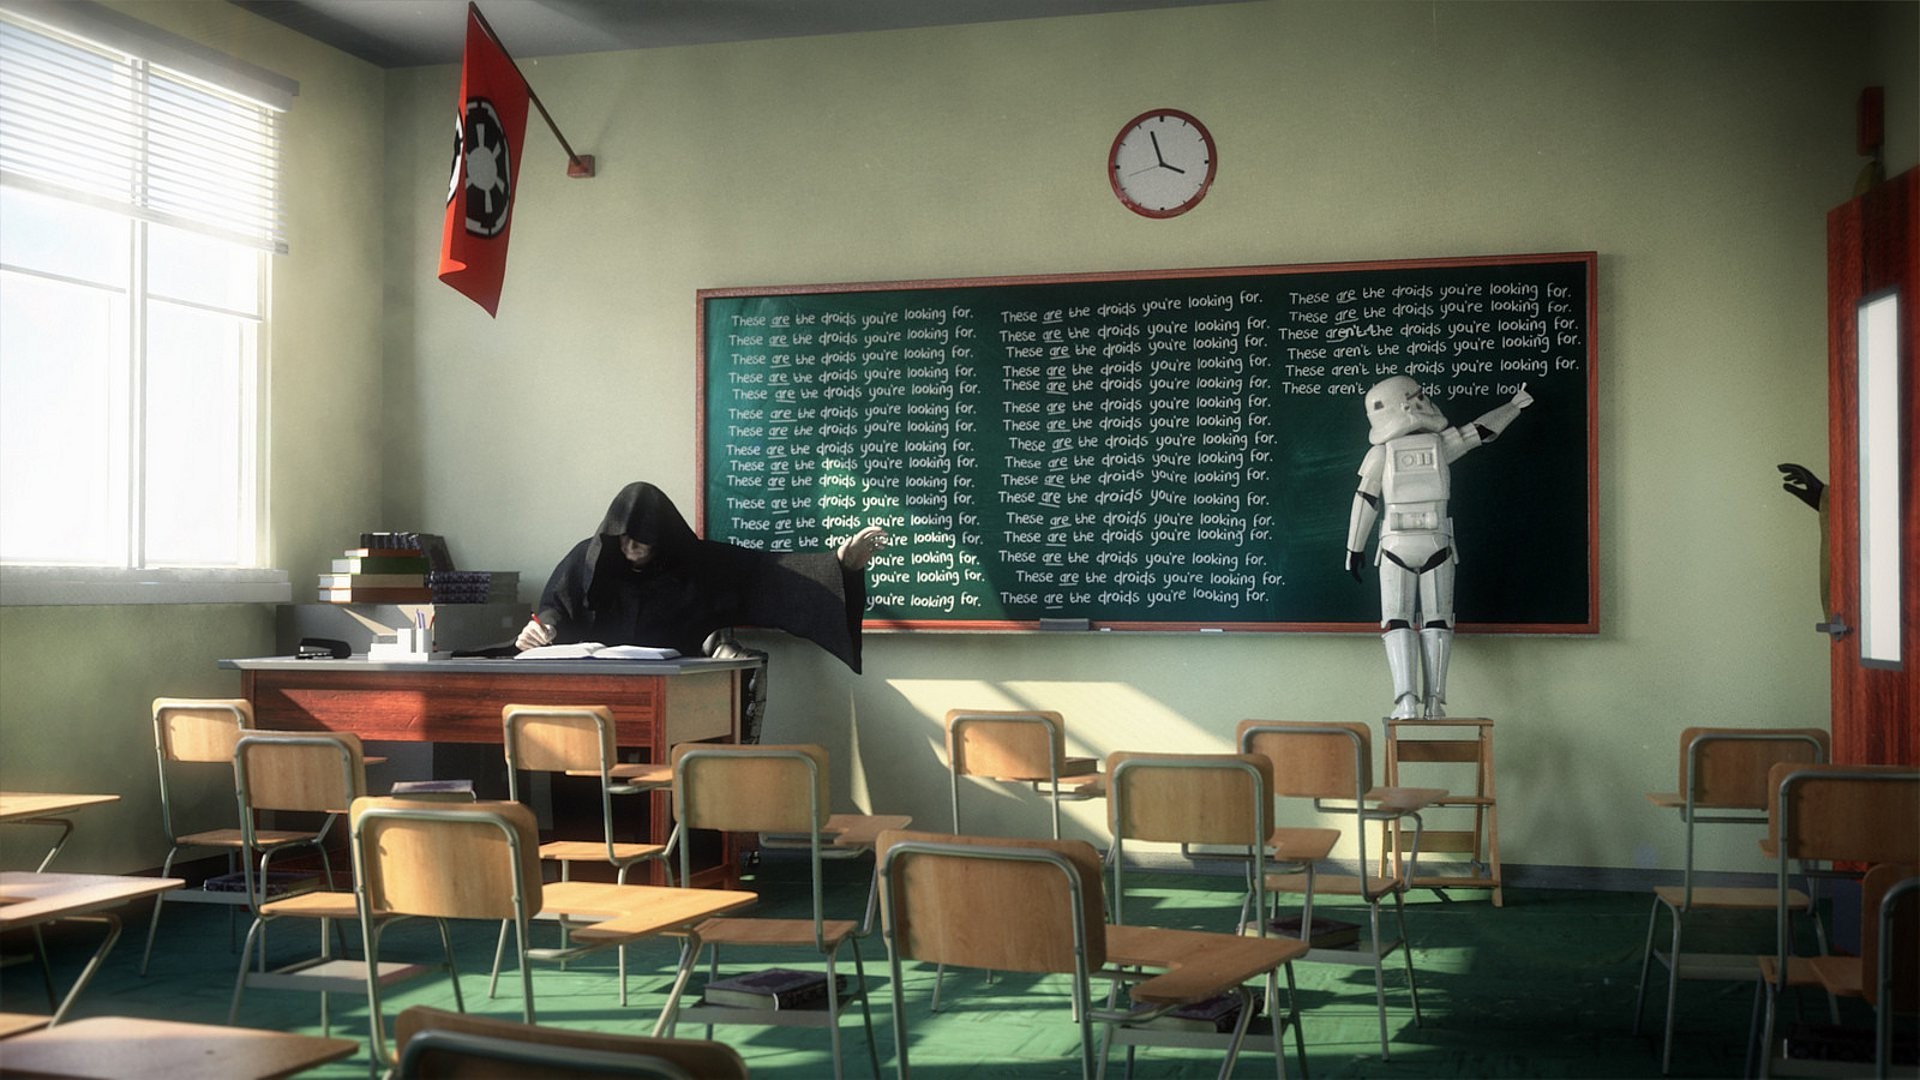 General 1920x1080 Sith classroom clocks Star Wars humor Darth Sidious Star Wars Humor school stormtrooper Imperial Stormtrooper